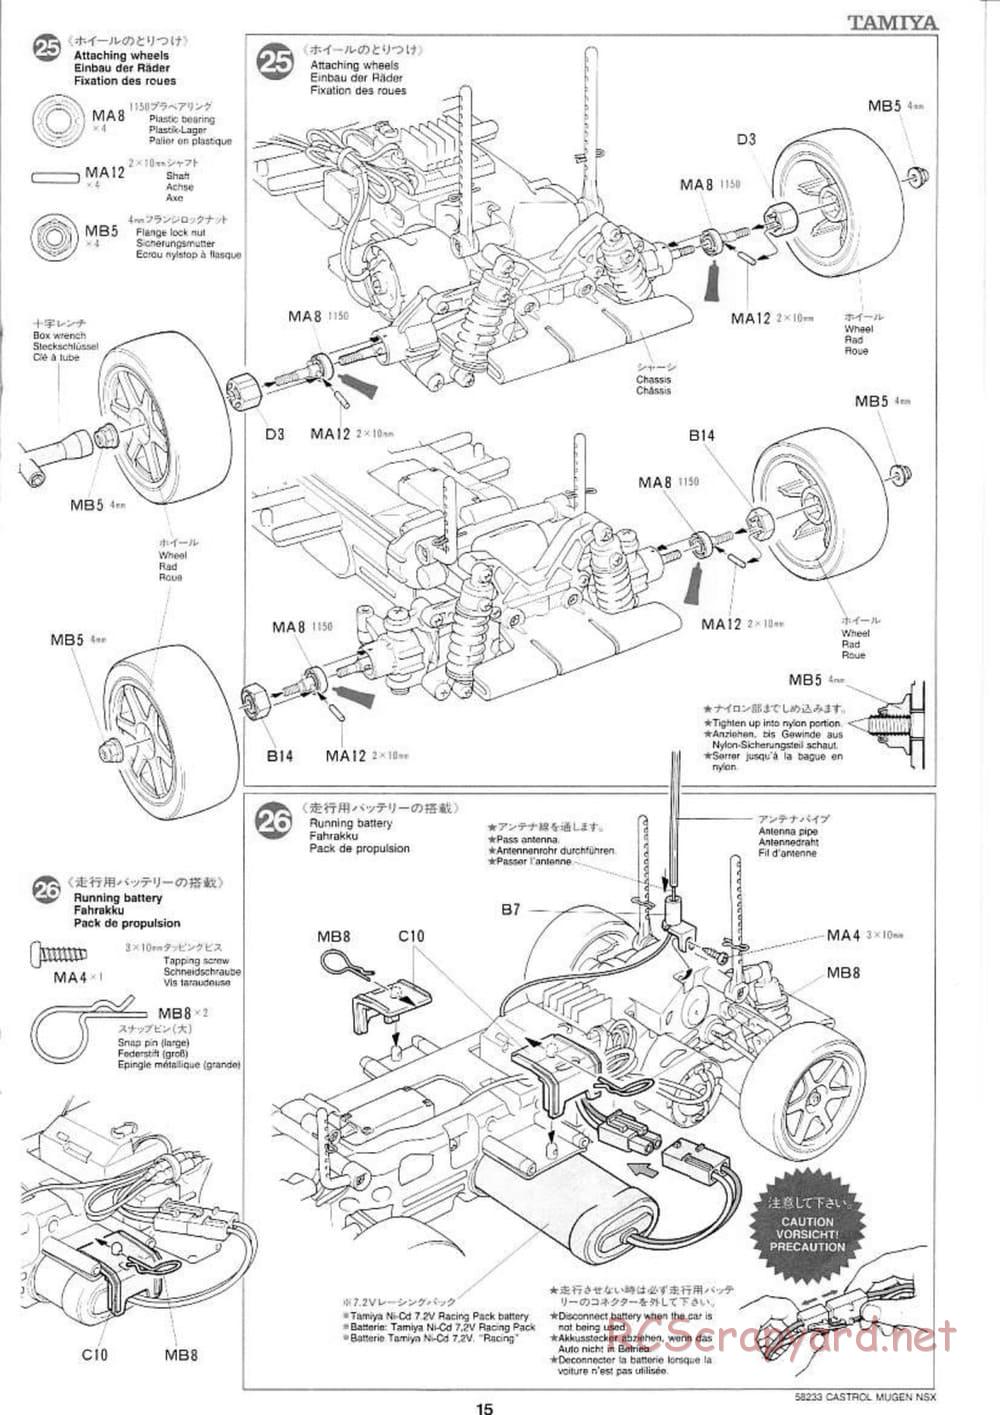 Tamiya - Castrol Mugen NSX - TL-01 Chassis - Manual - Page 15